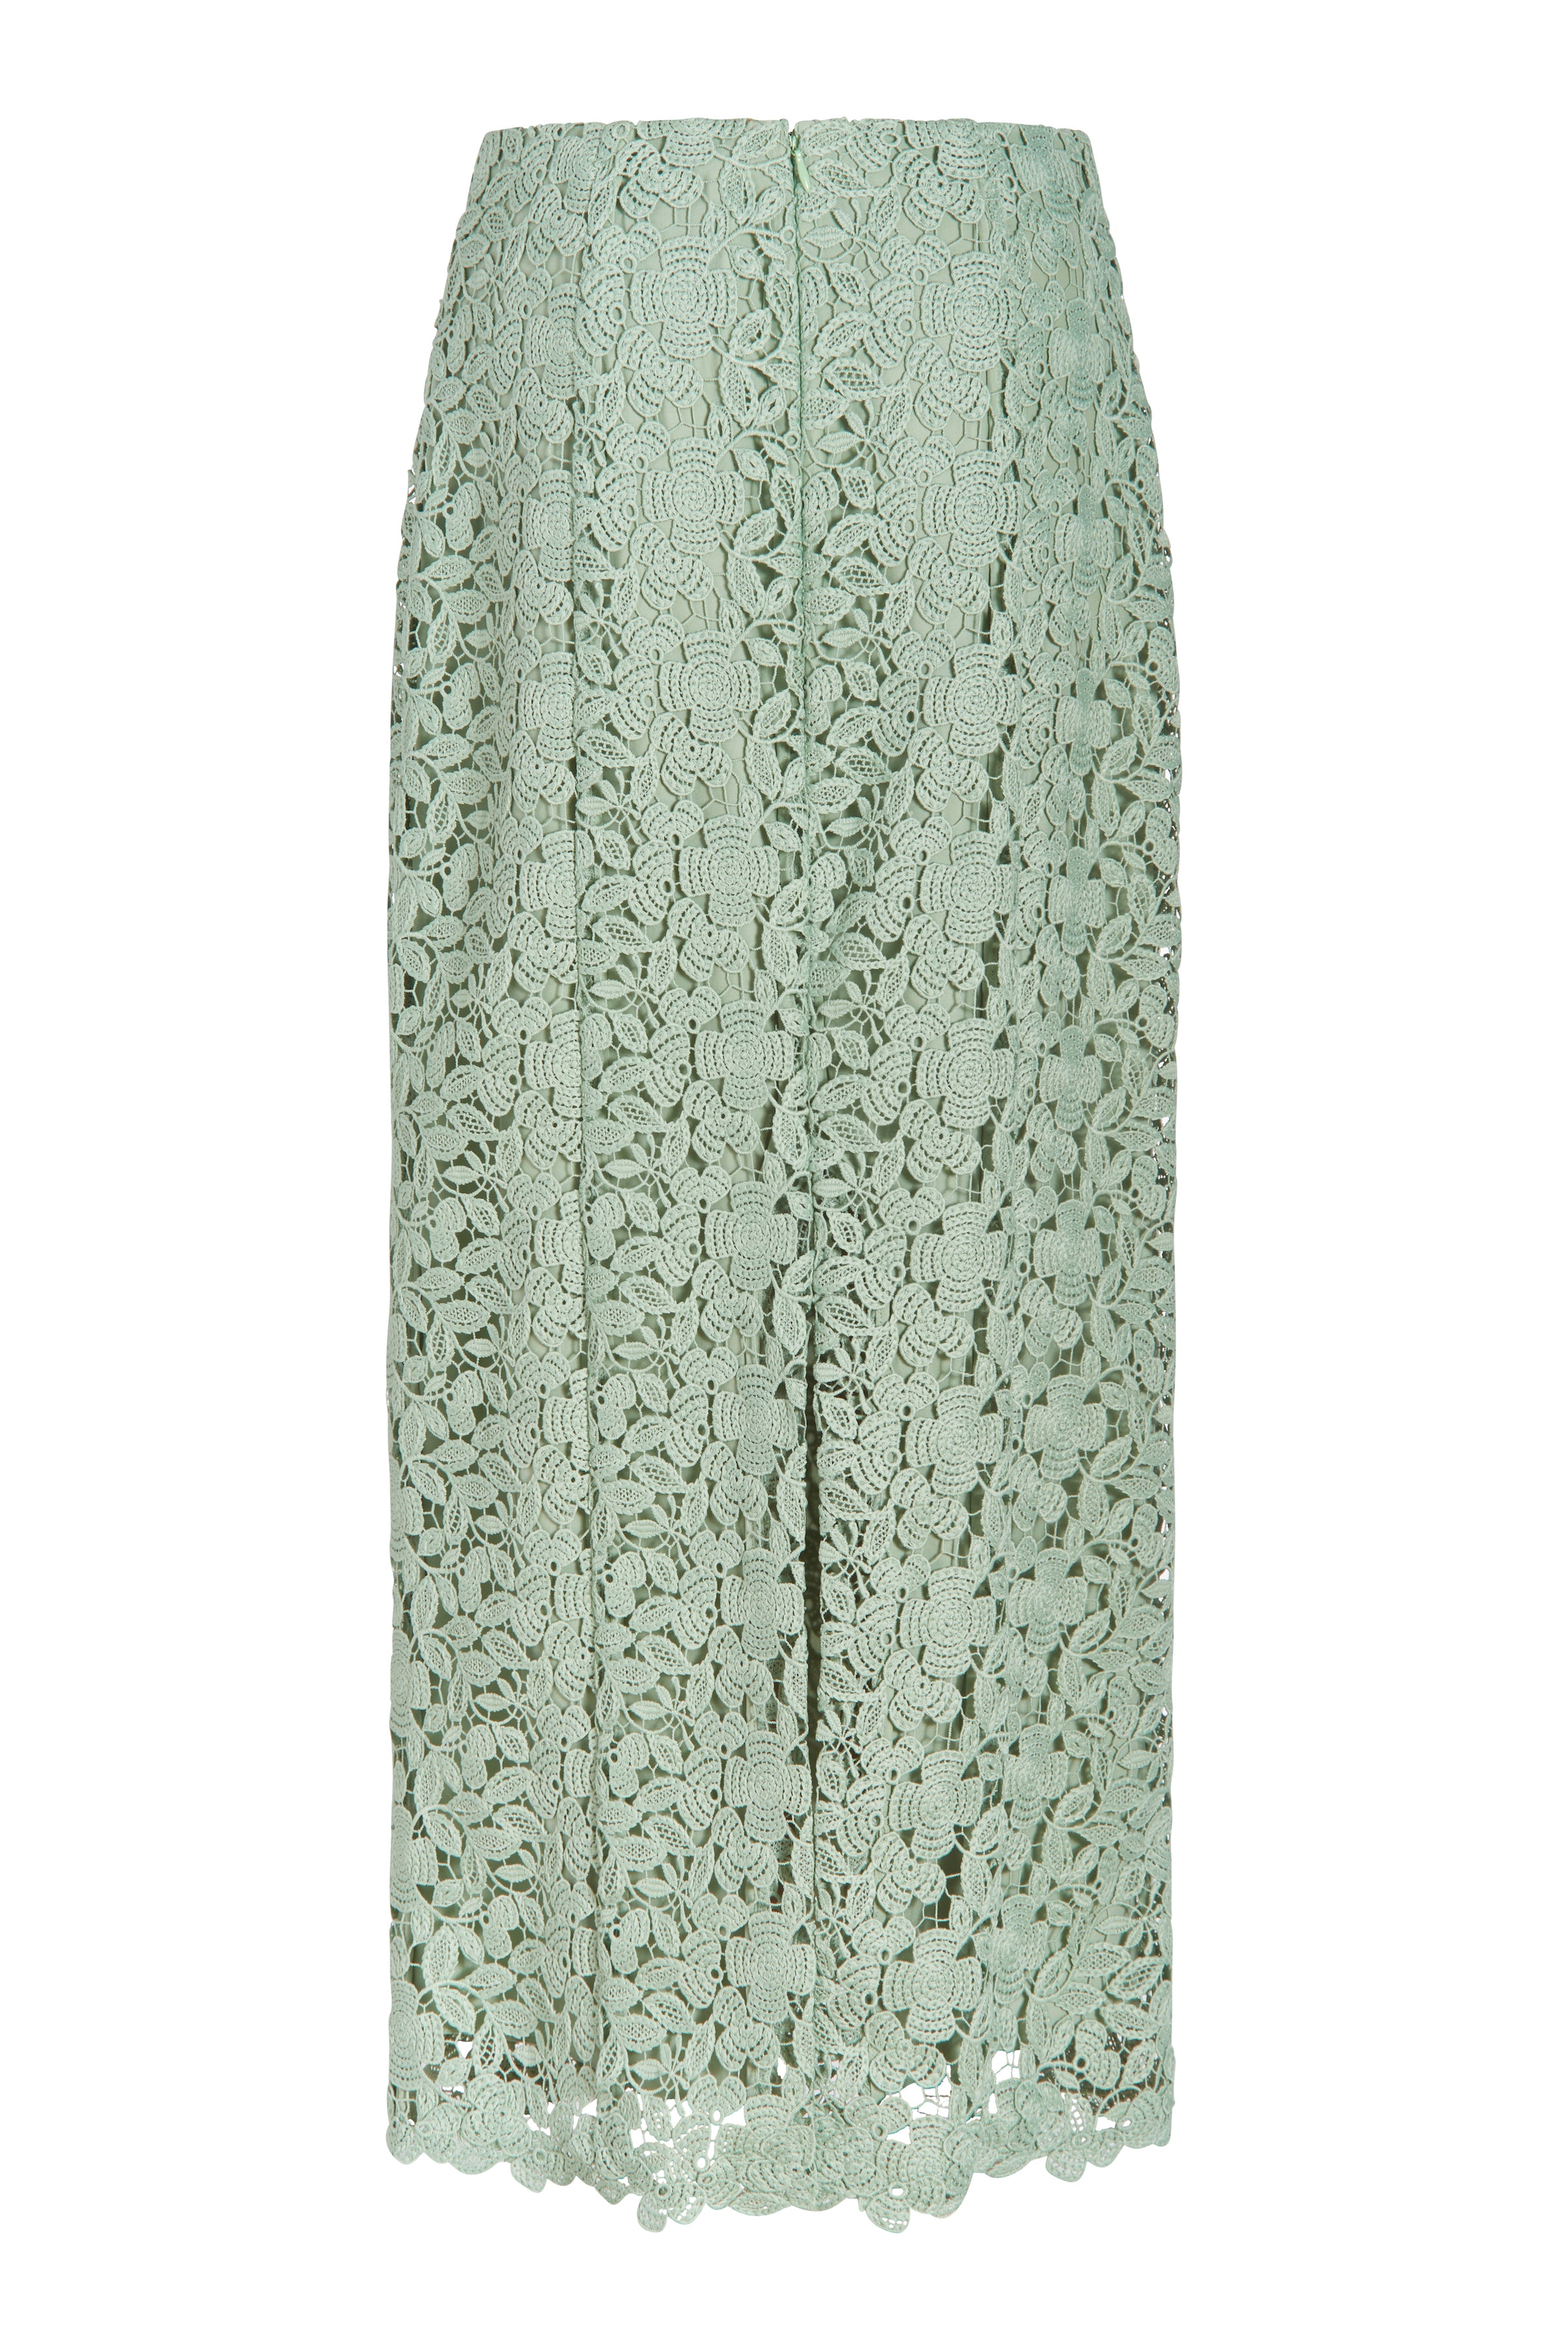 Tammy Green Crochet Lace Skirt